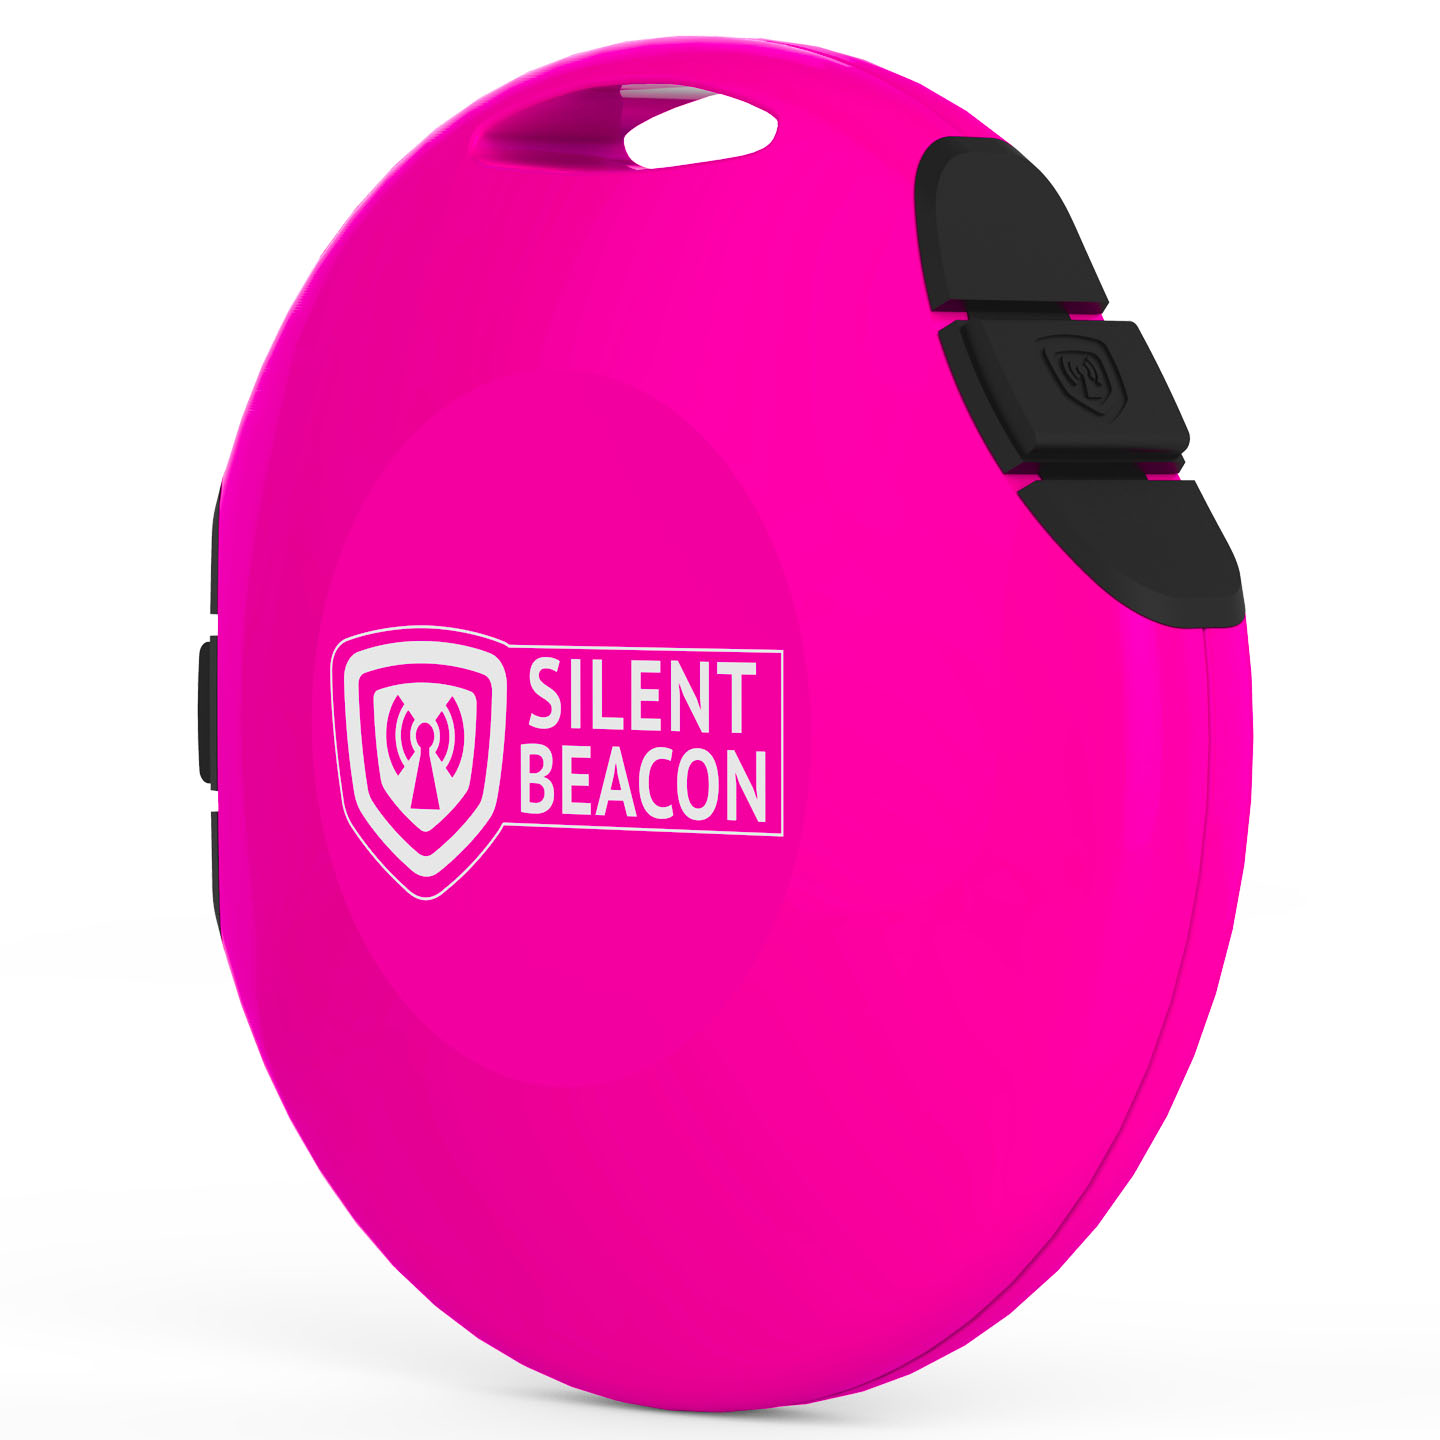 Silent Beacon – Safety Gadget